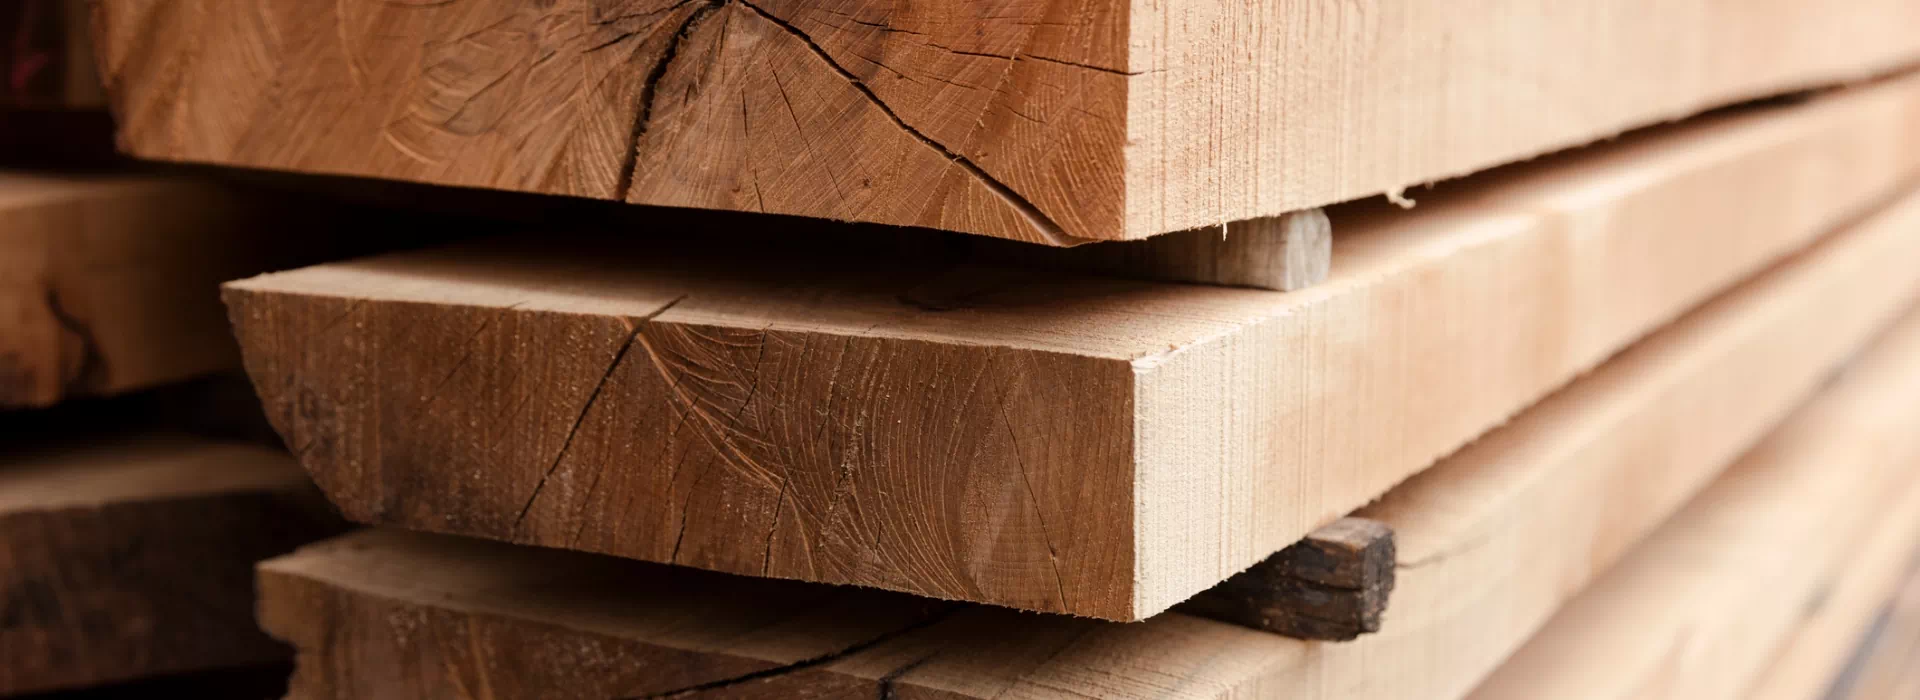 drewniane deski z bliska